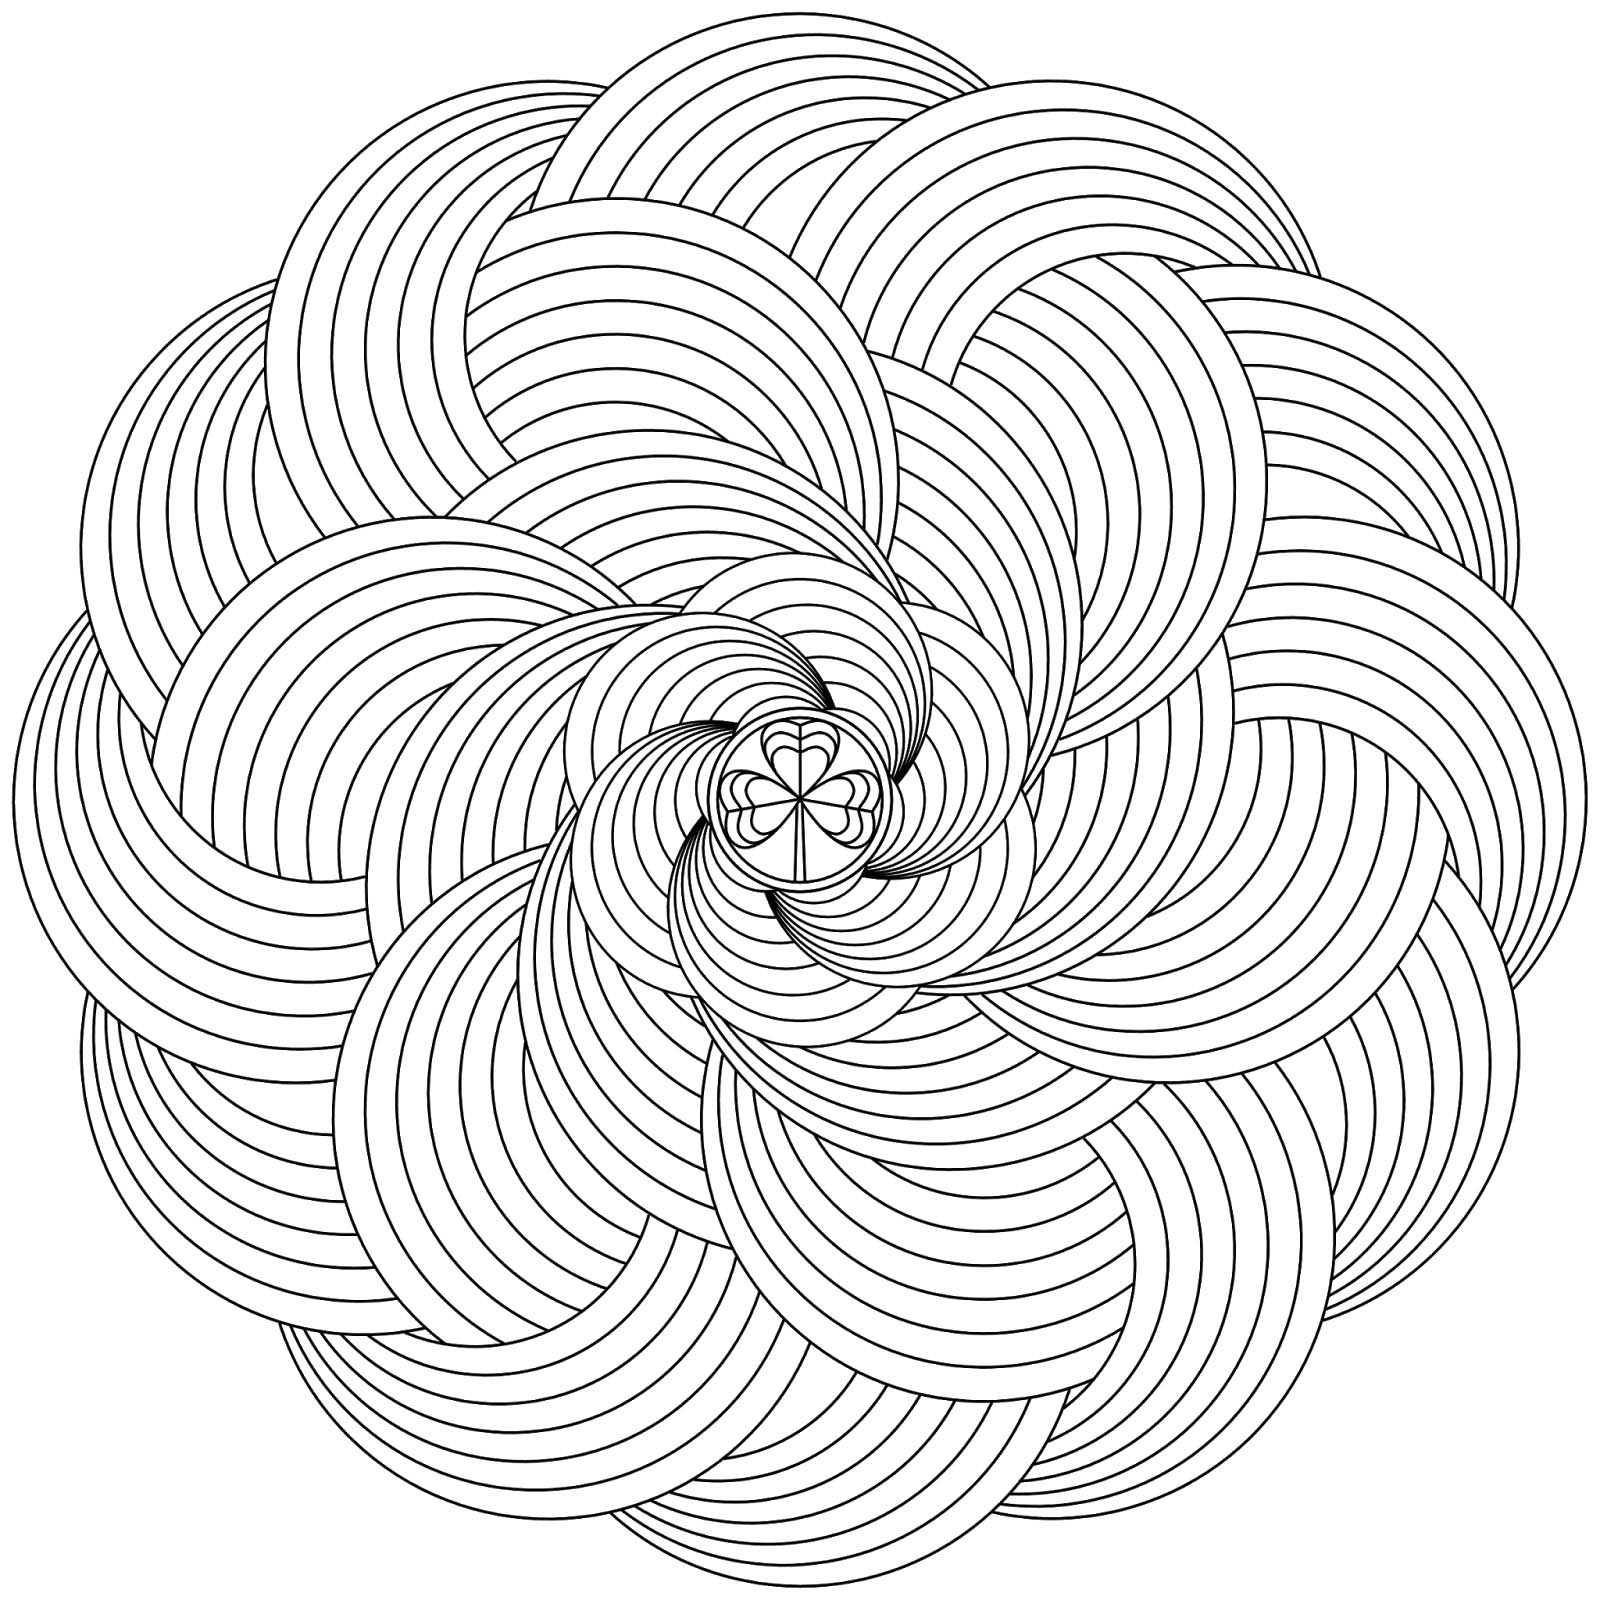 Mandala da scaricare in pdf - 7 - Immagine comprendente : Arcobaleno